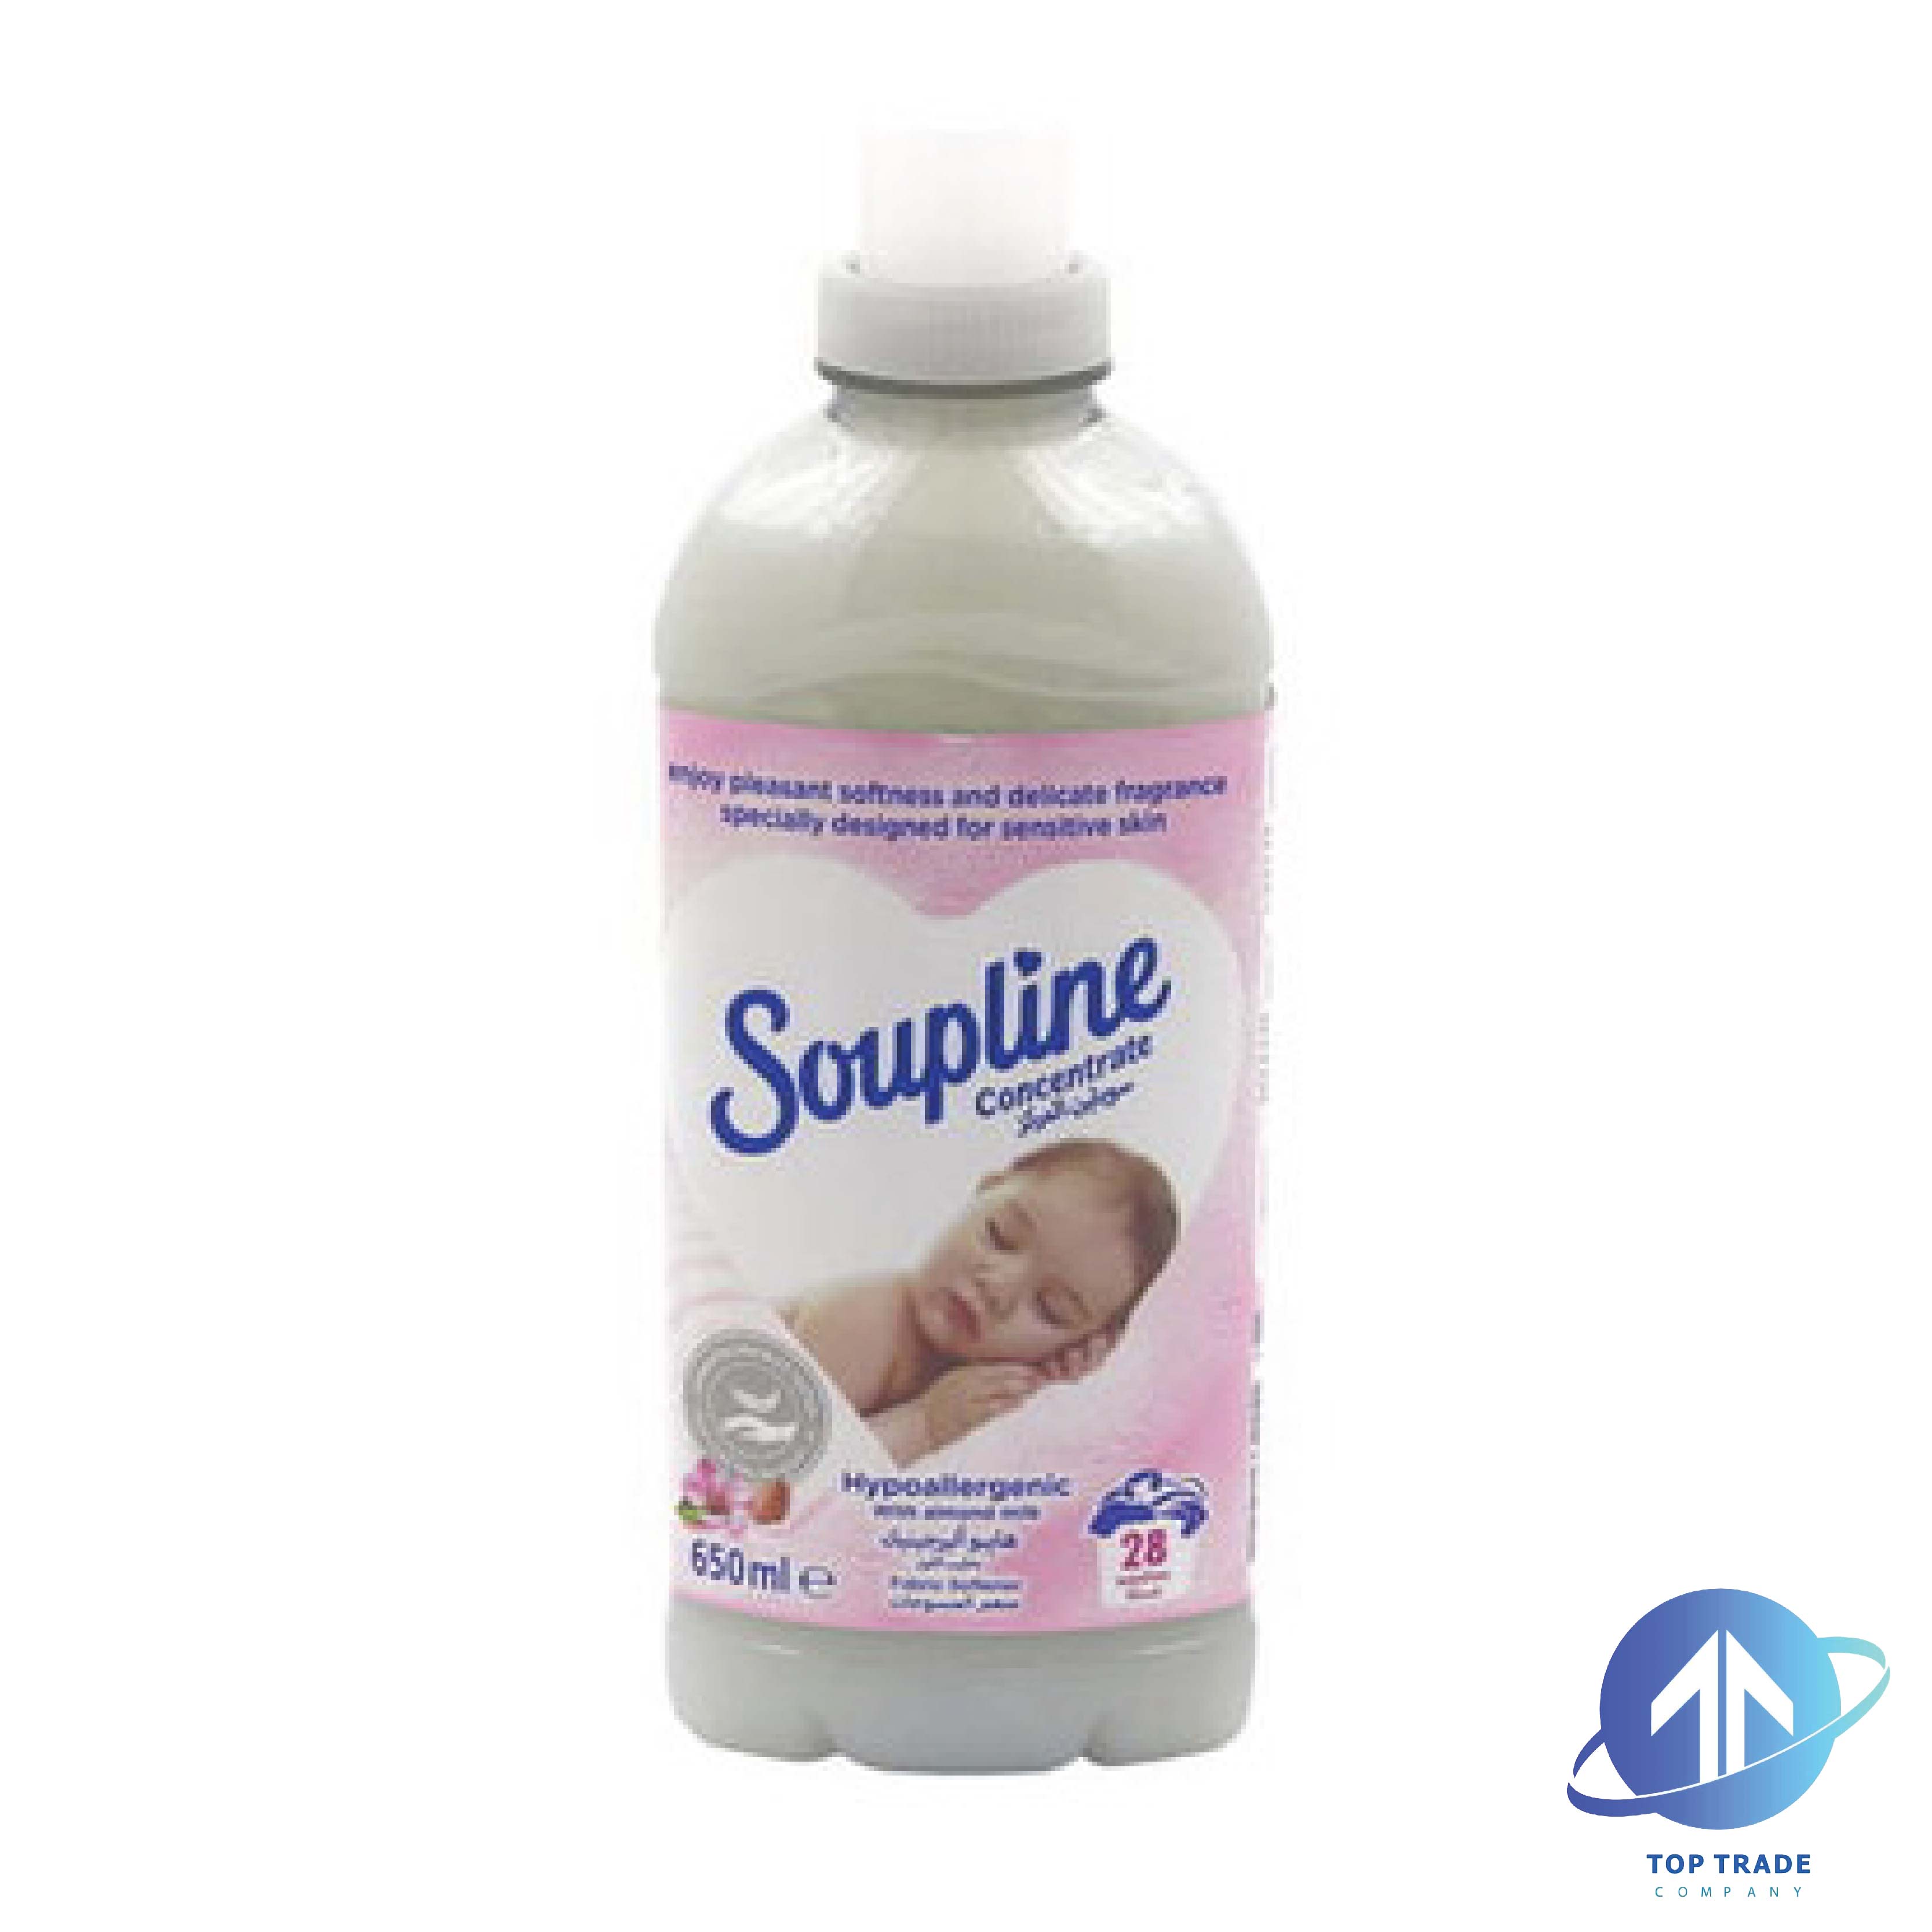 Soupline softener 650ml/28sc Hypoallergenic concentrated